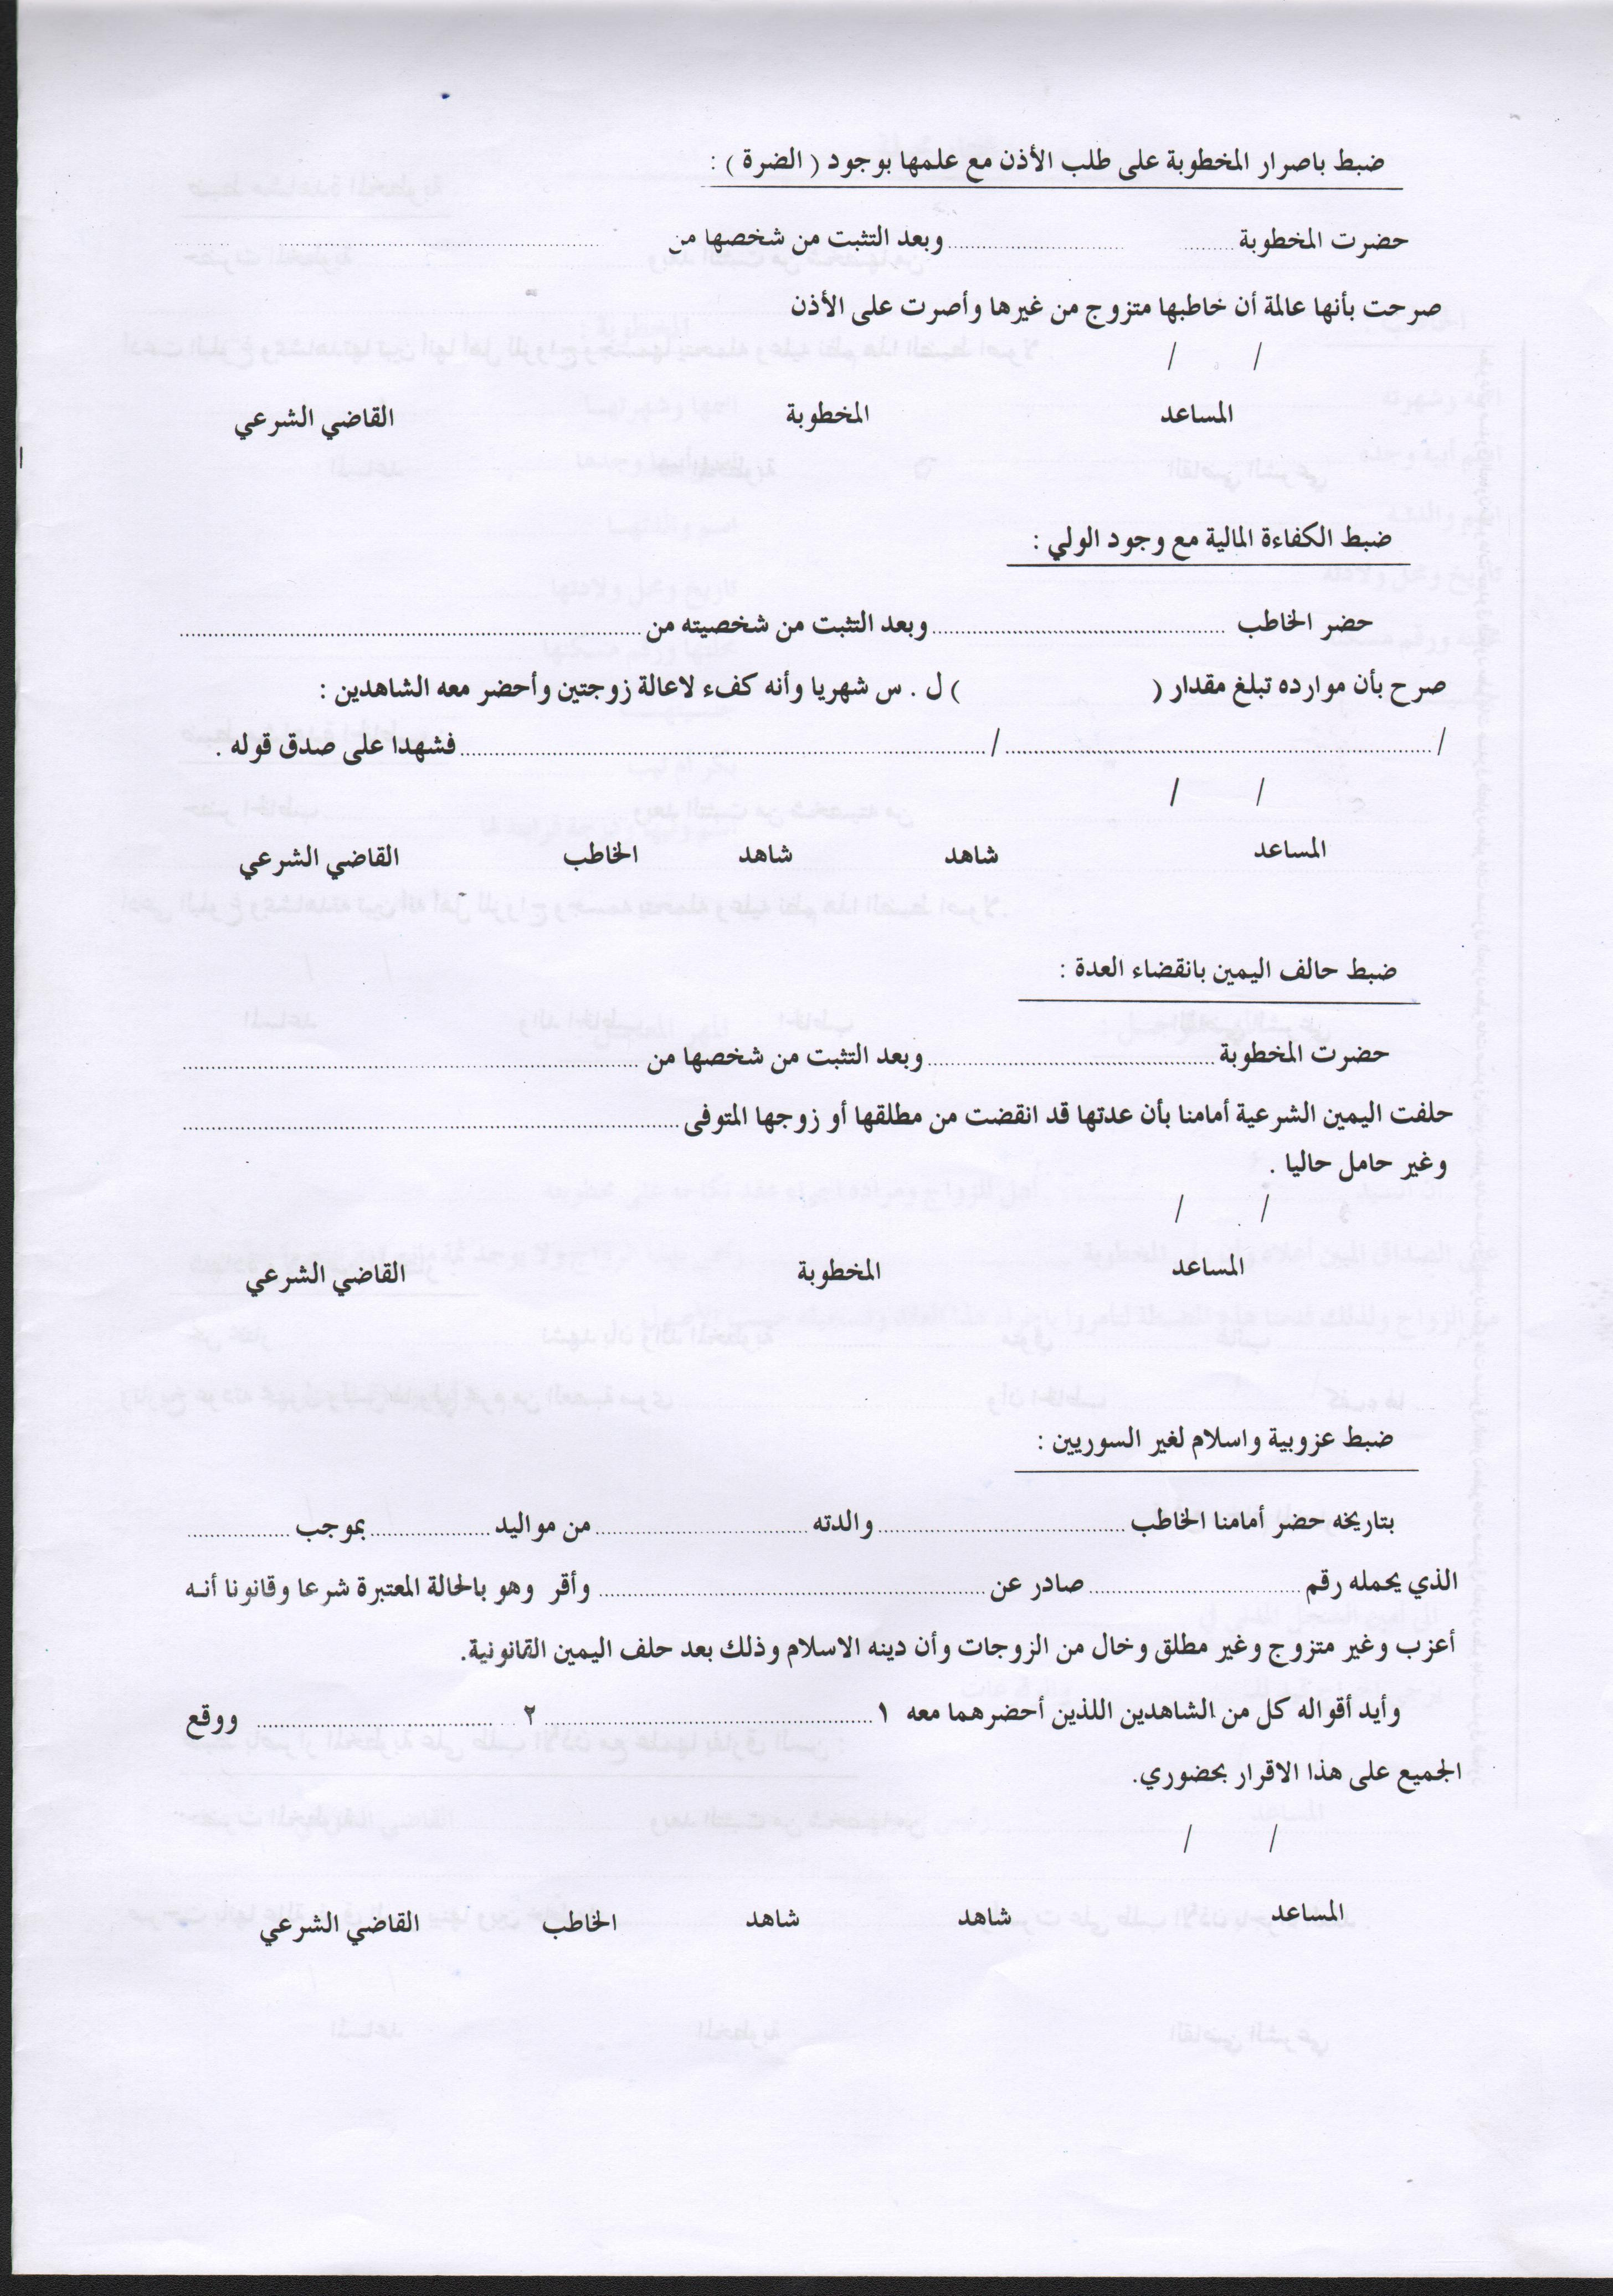 نموذج عقد زواج شرعي اردني sadflop